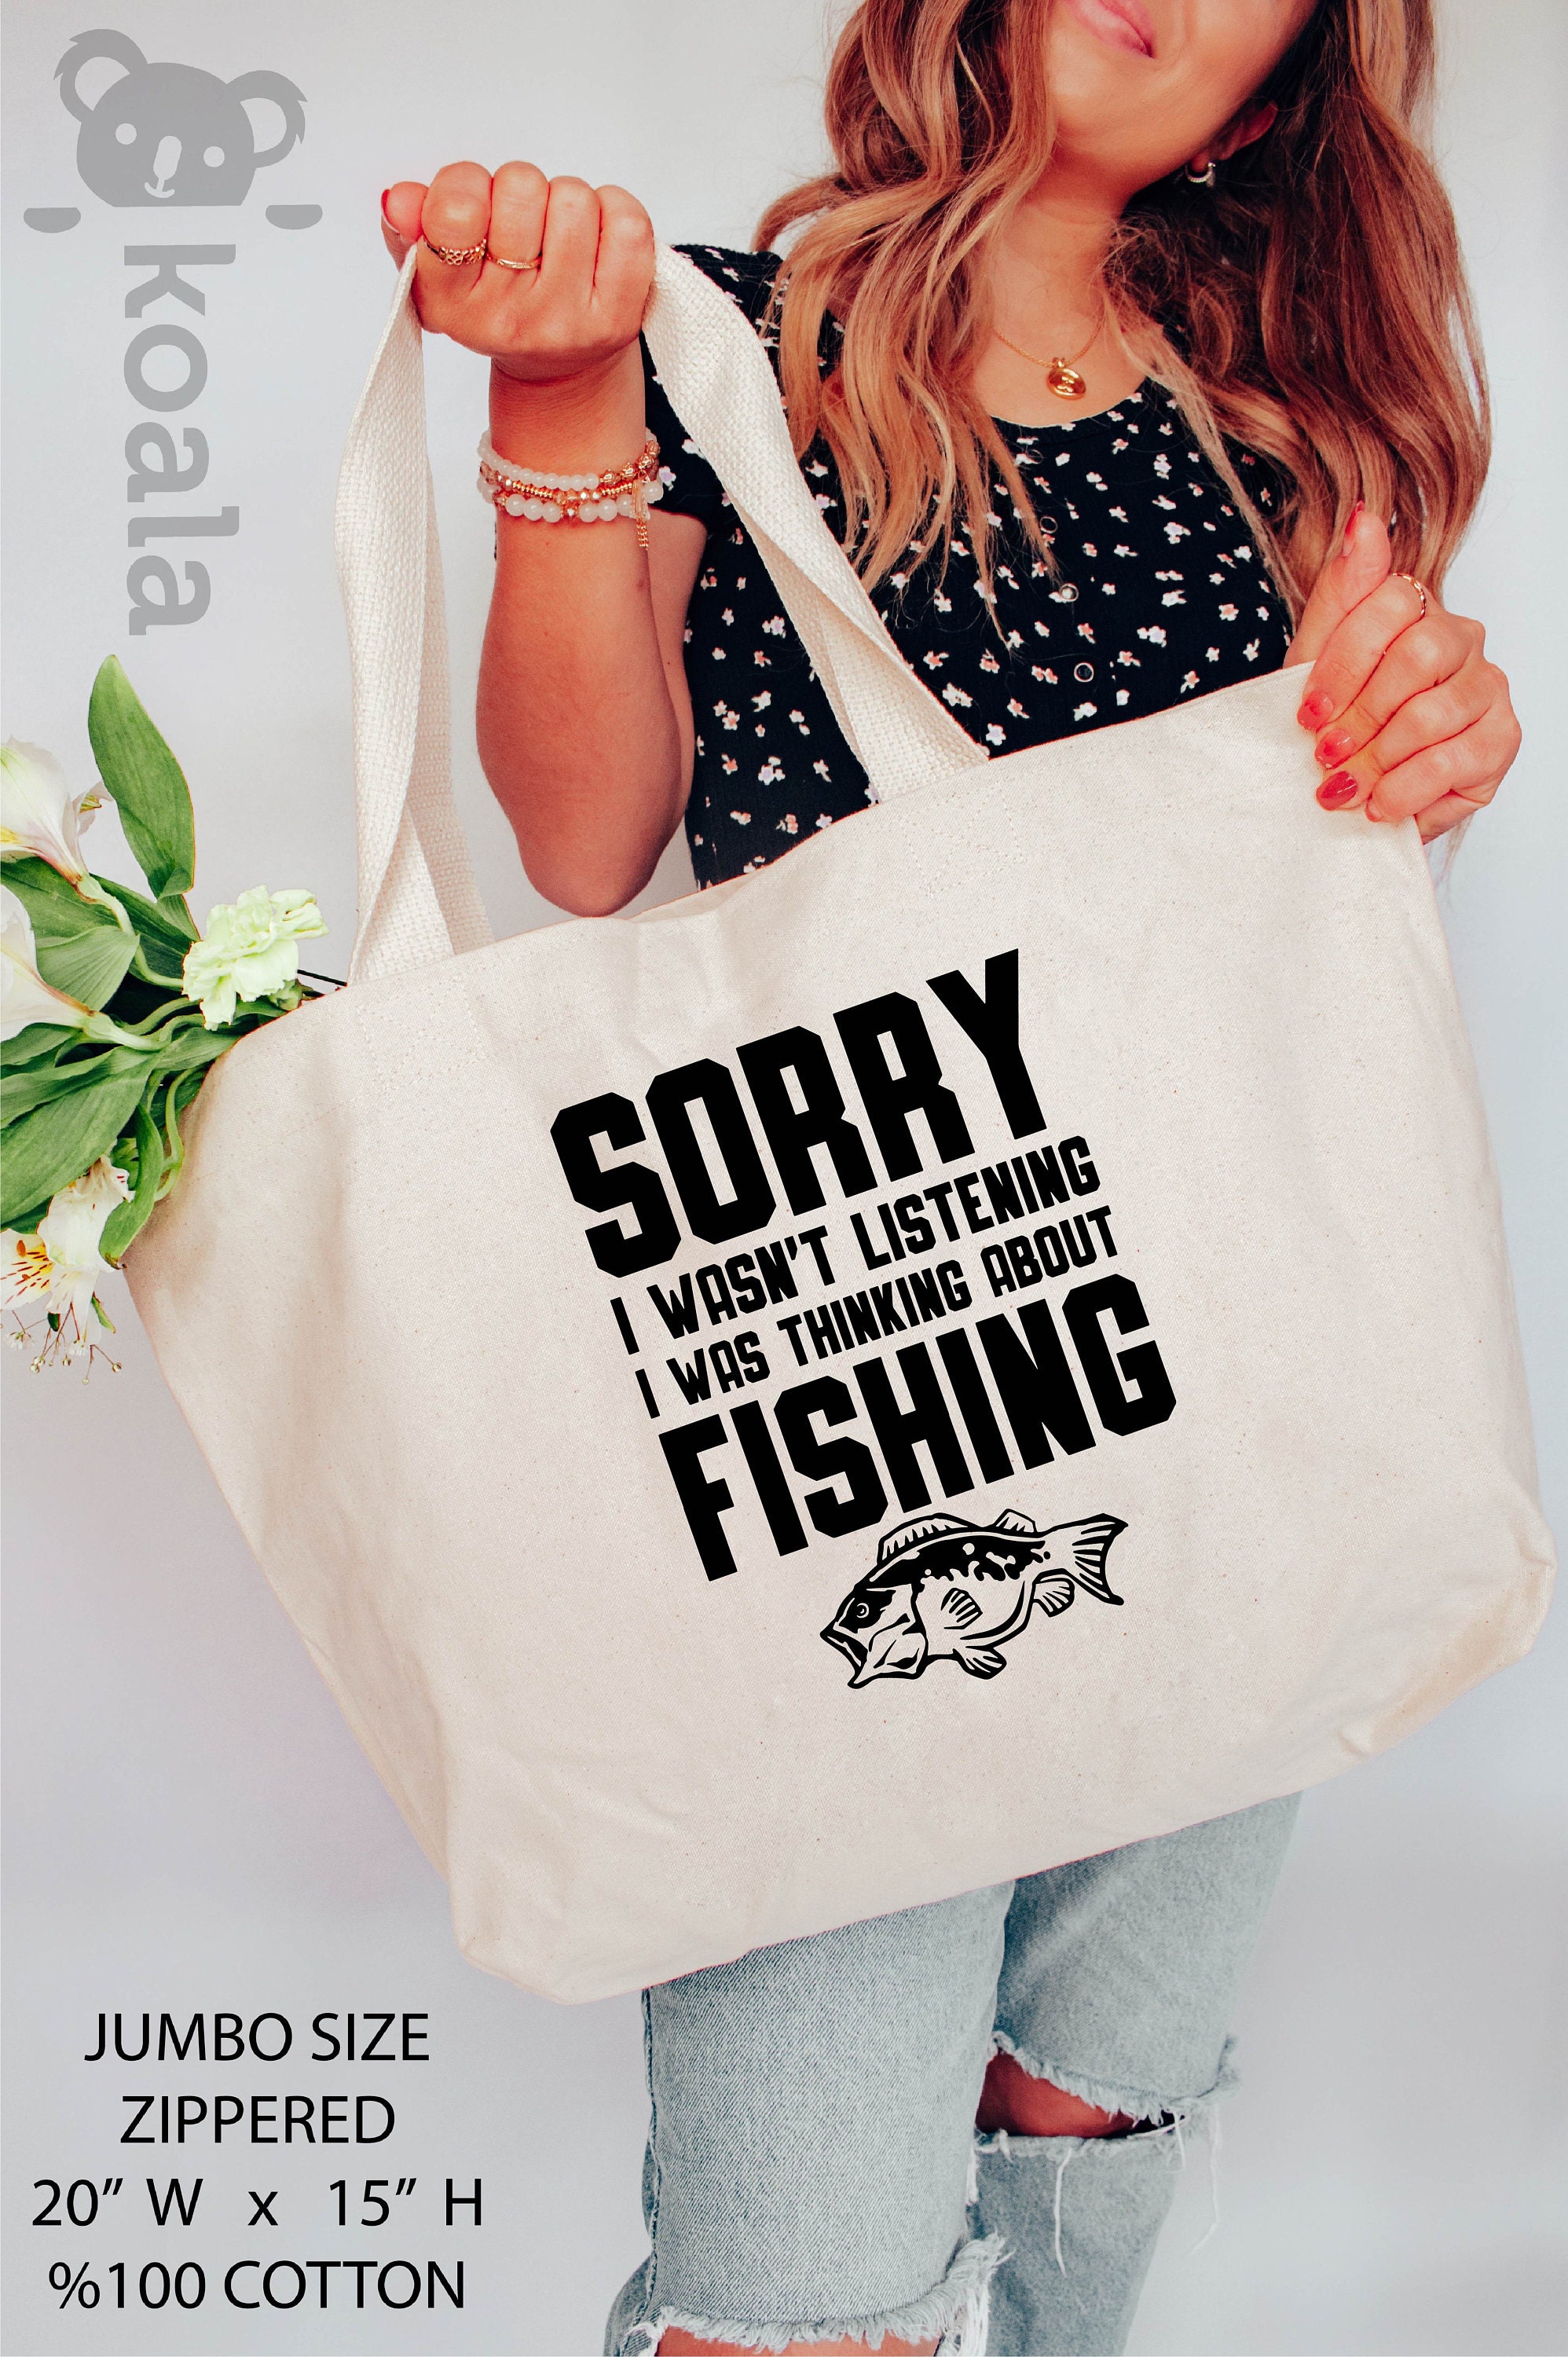 Avid Fisherman's Tote Bag, Cute Fishing Hooked Tote, Bright